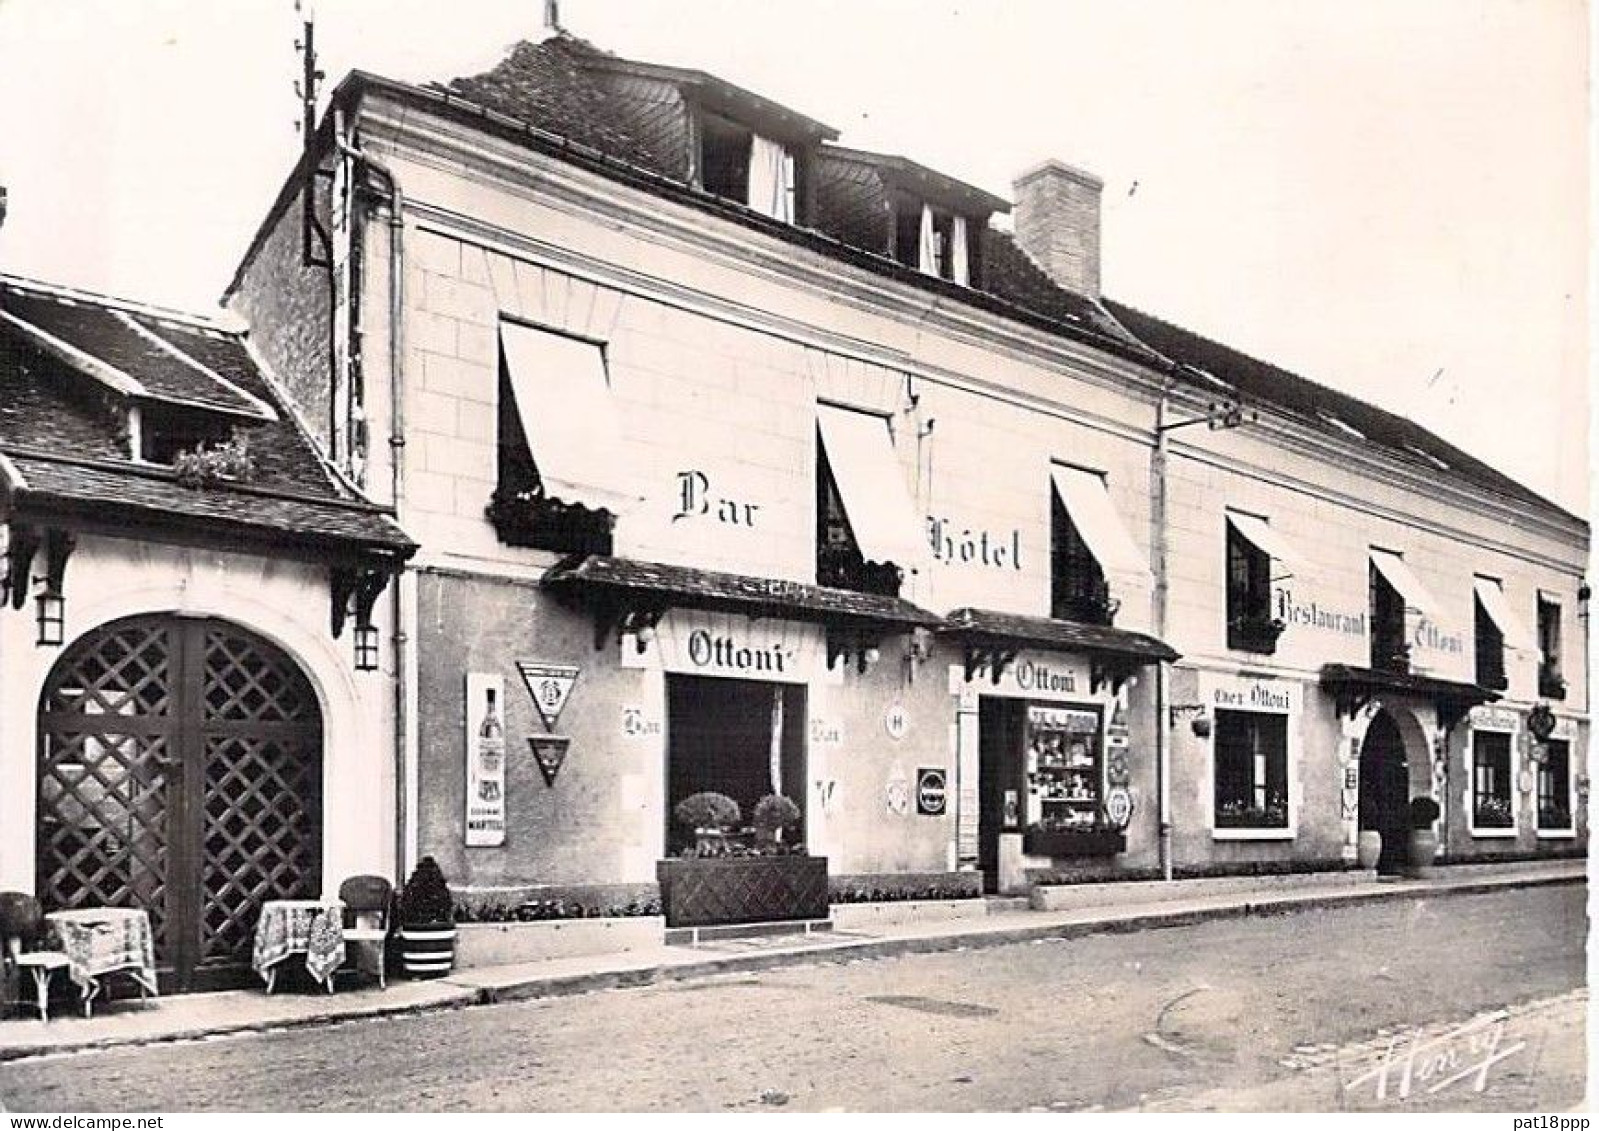 FRANCE - Joli lot de 20 CPSM dentelées HOTEL RESTAURANT Noir-Blanc Grand Format en BON 1er PLAN (1/2) BON ETAT